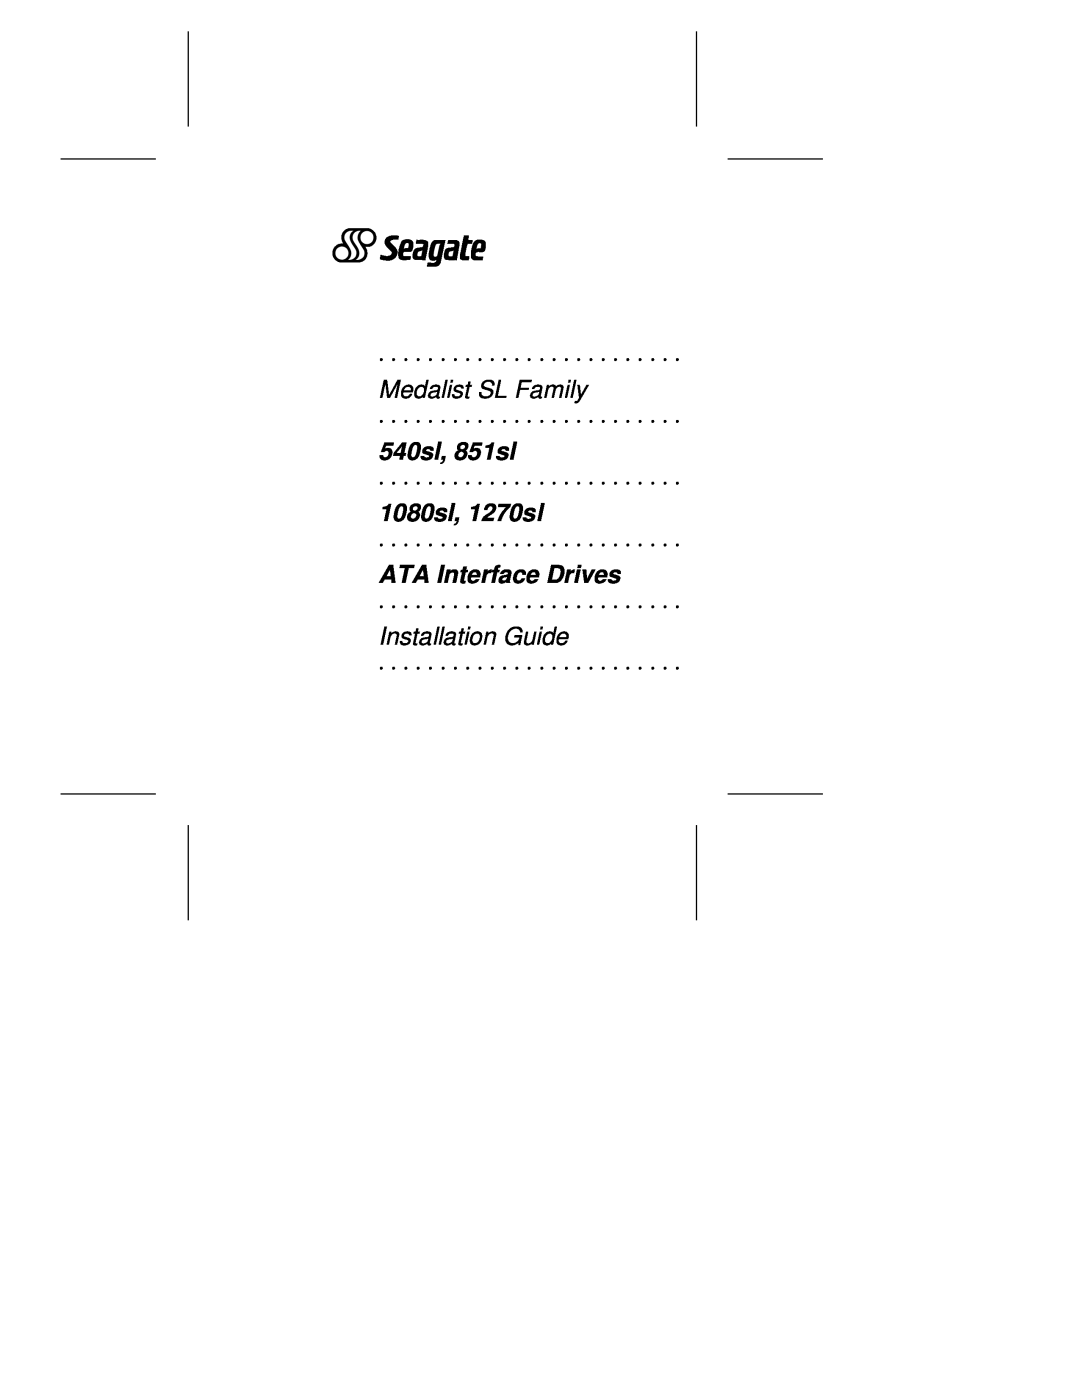 Seagate 851SL, 1080SL manual Medalist SL Family, 540sl, 851sl, 1080sl, 1270sl, ATA Interface Drives, Installation Guide 